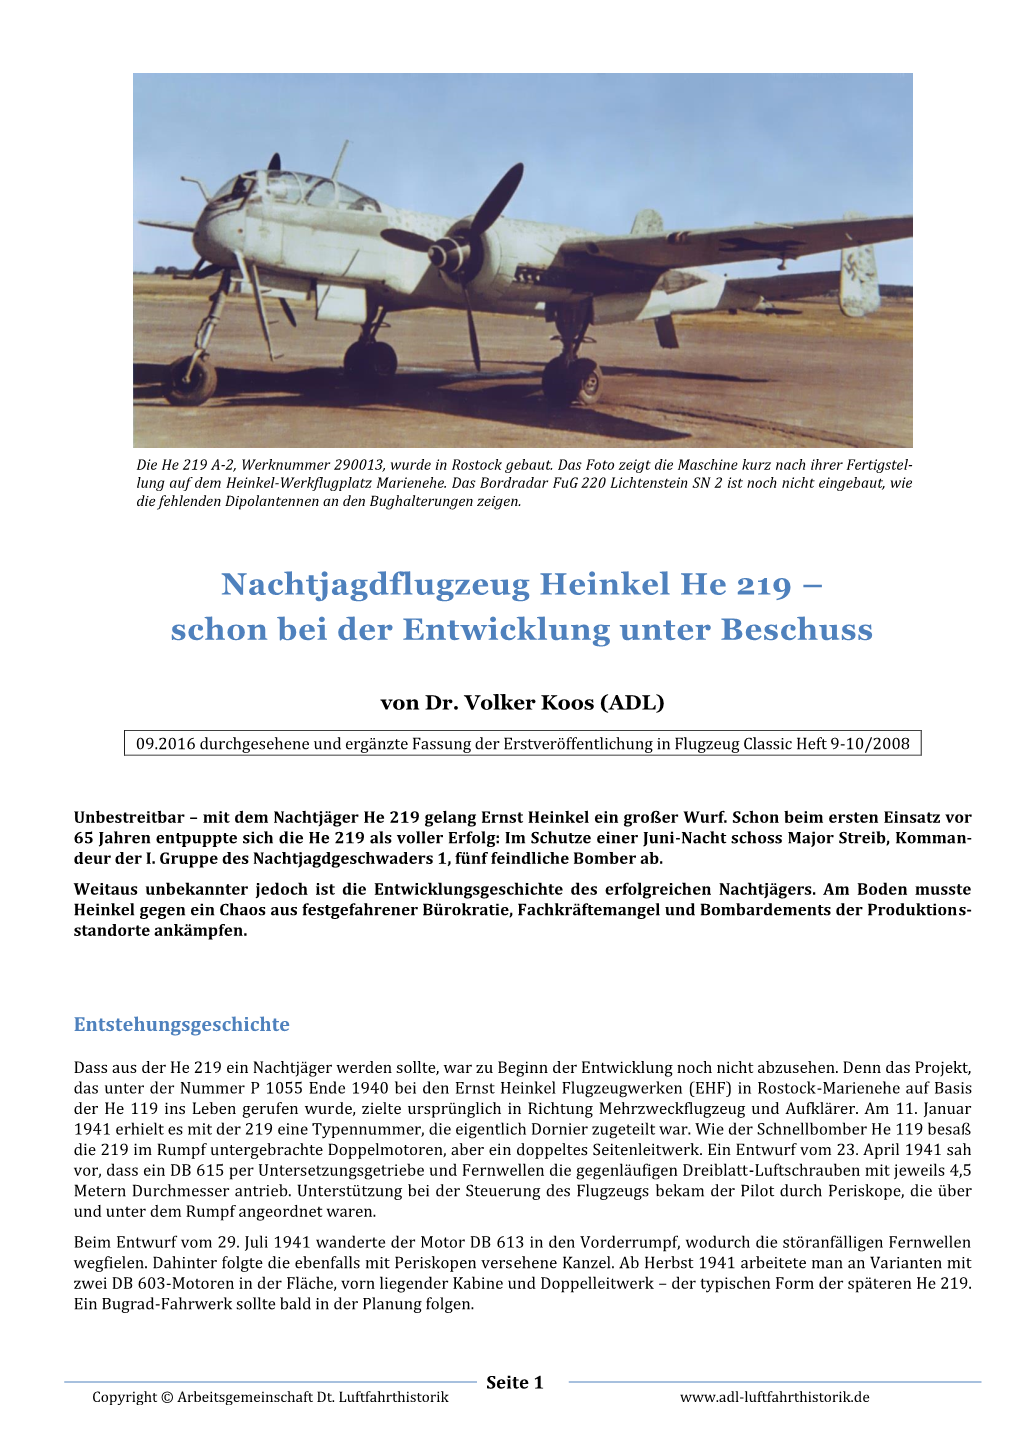 Heinkel He 219 Nachtjagdflugzeug